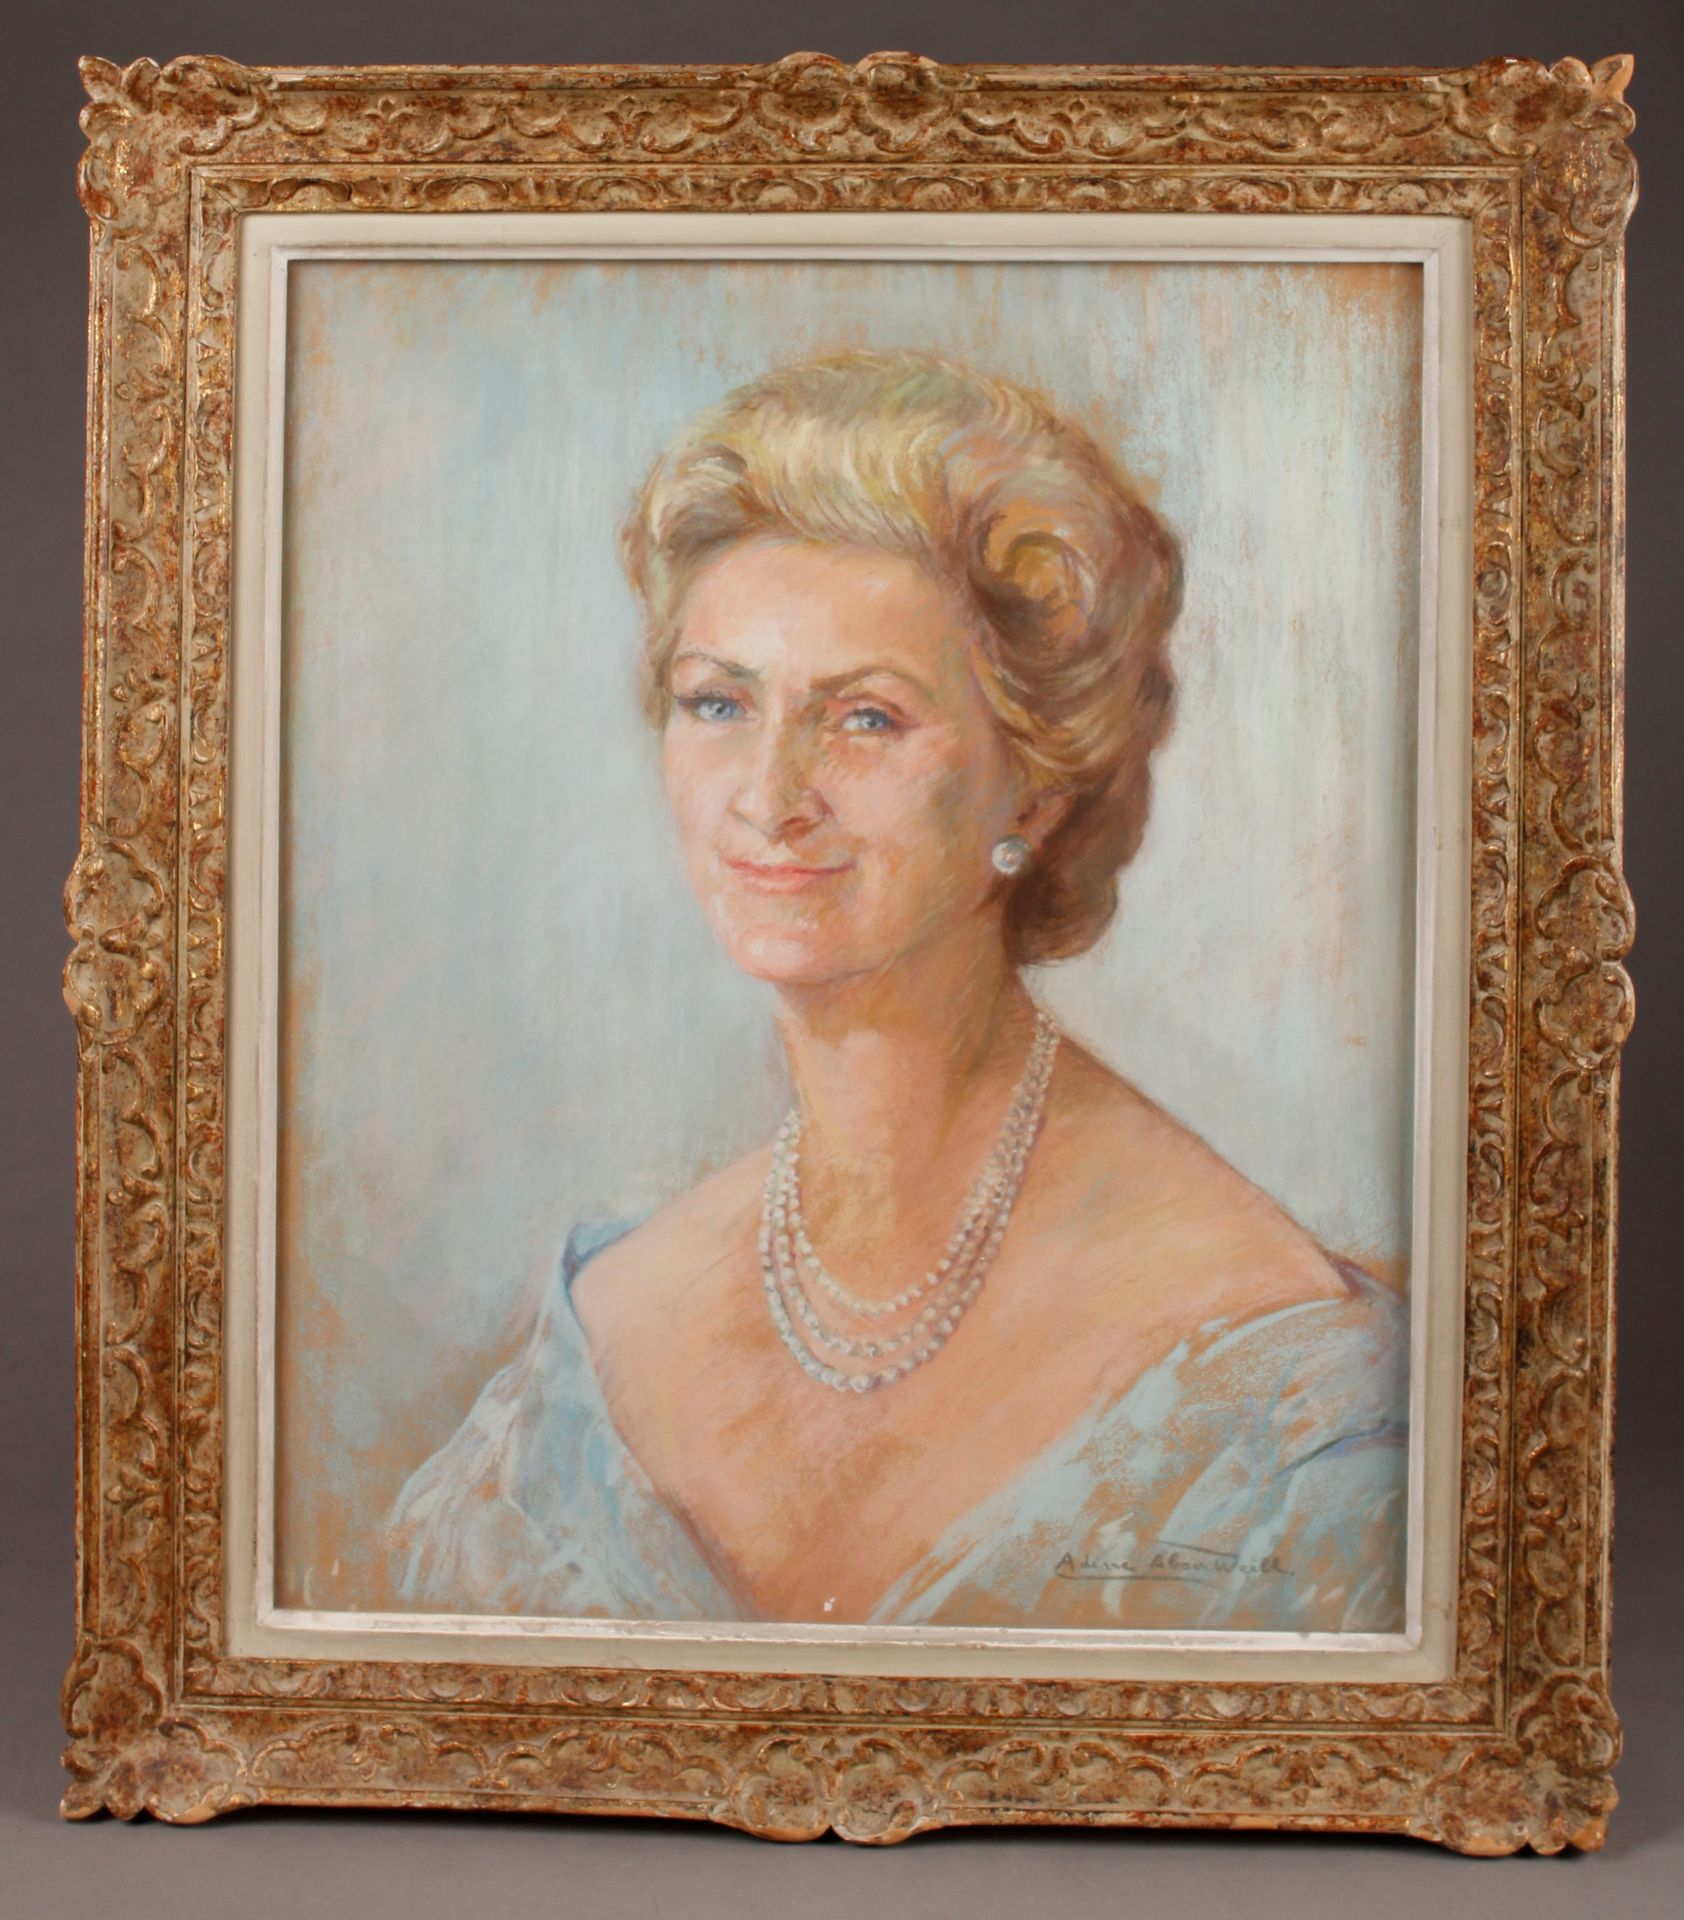 Null 20世纪的学校
一个戴着珍珠项链的半身女人的画像。
粉彩画，右下方有Adine ABOU WEILL的签名。
59 x 50 厘米
(在玻璃下装框)。